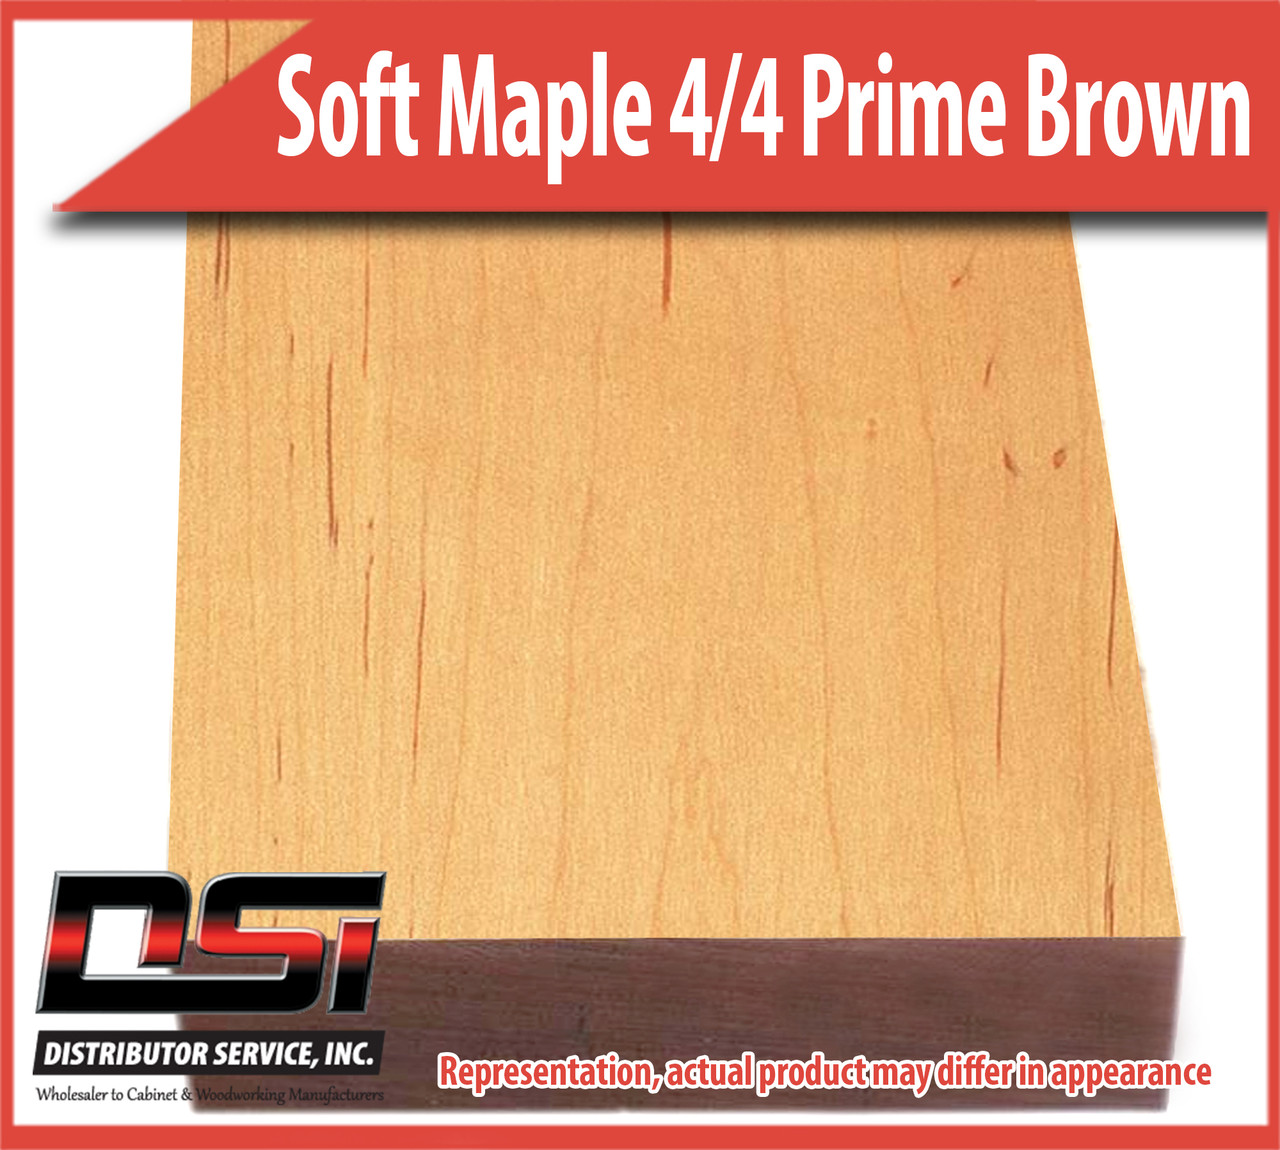 Domestic Hardwood Lumber Soft Maple 4/4 Prime Brown 15/16" 11-12